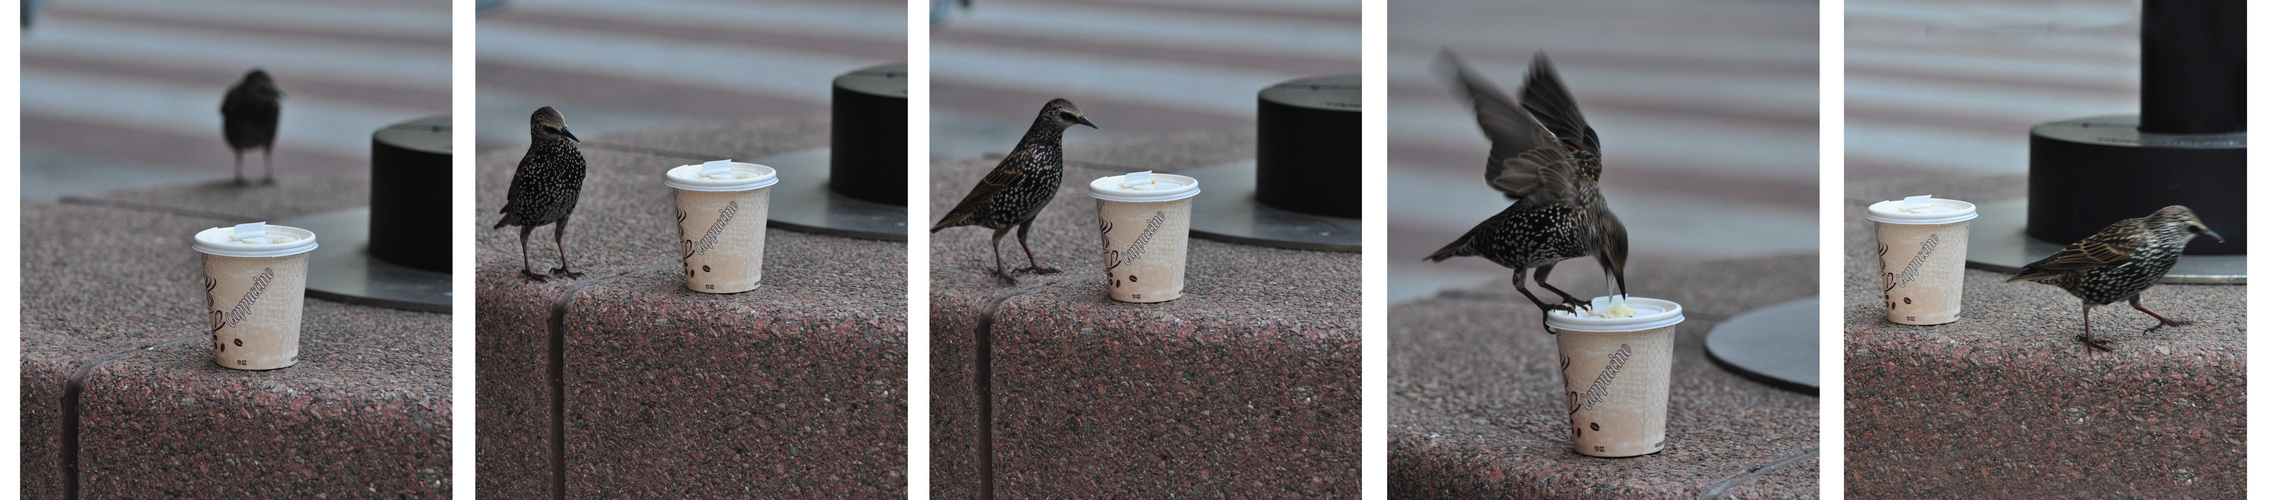 Urban Birds like Starbucks